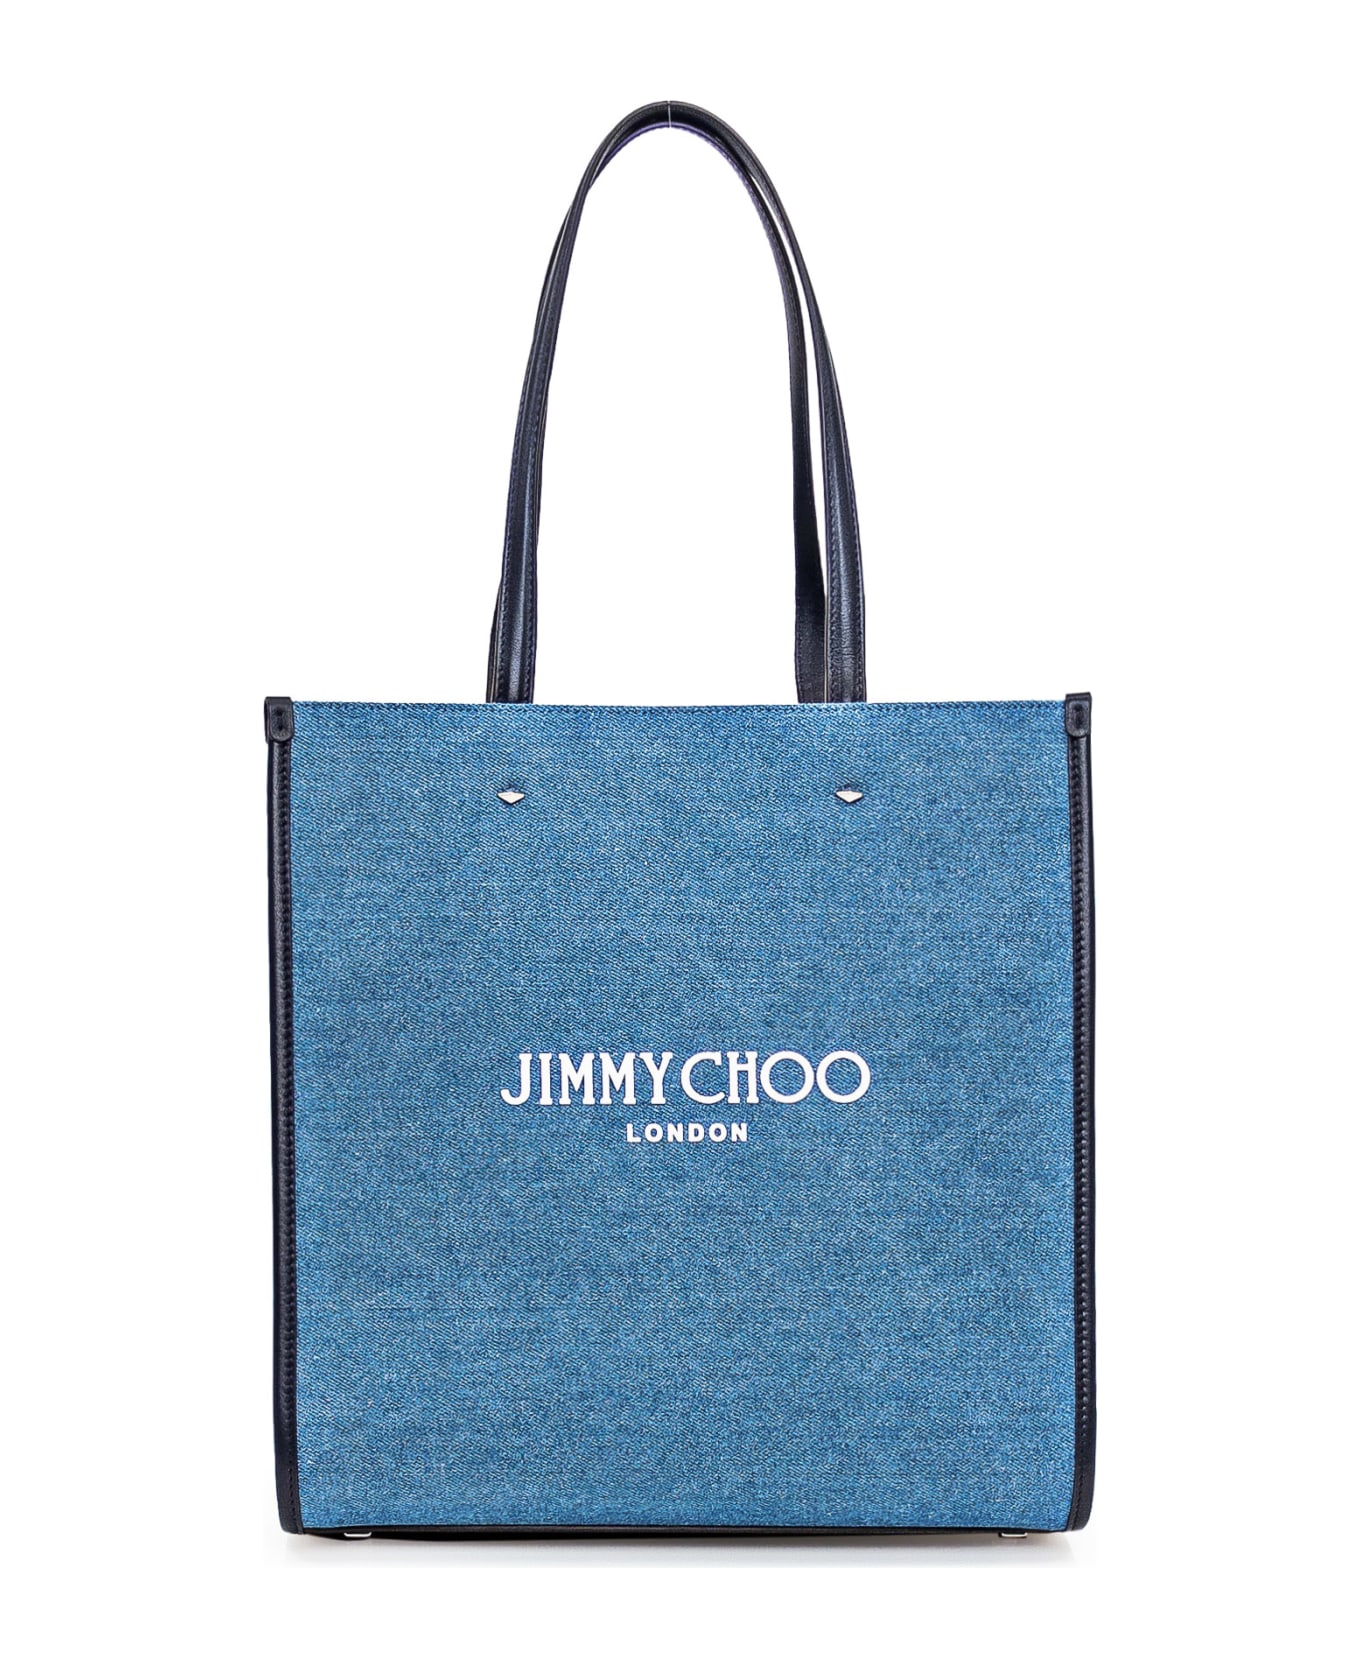 Jimmy Choo Tote Bag M - DENIM/NAVY/WHITE/SILVER